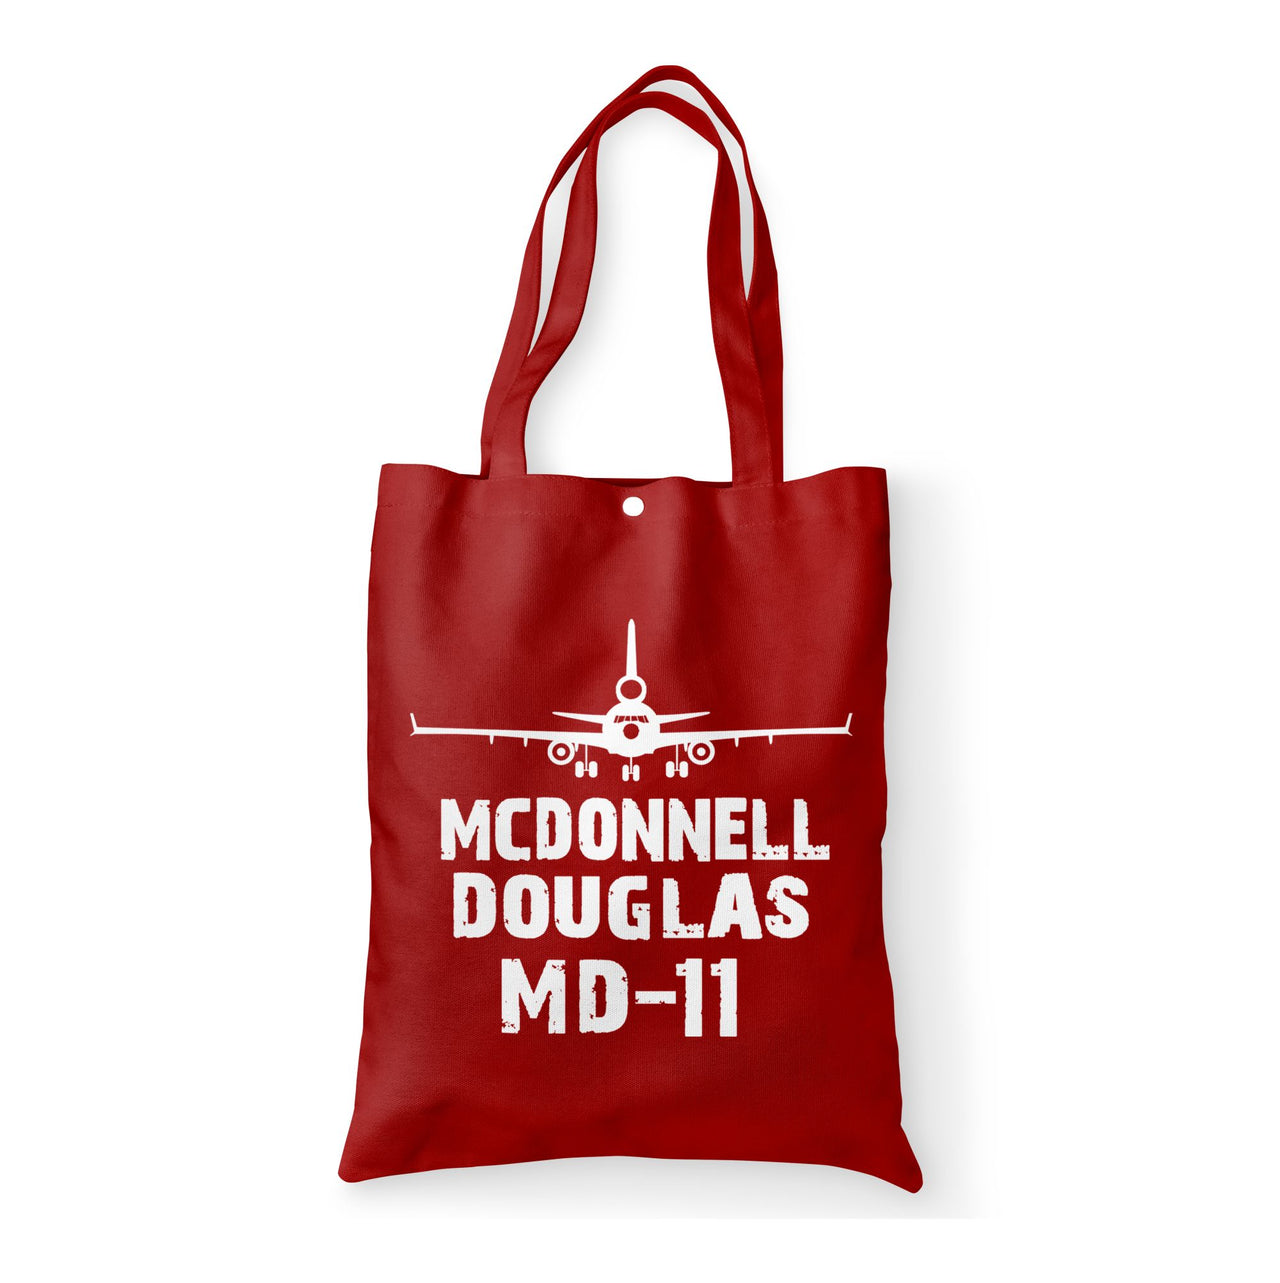 McDonnell Douglas MD-11 & Plane Designed Tote Bags